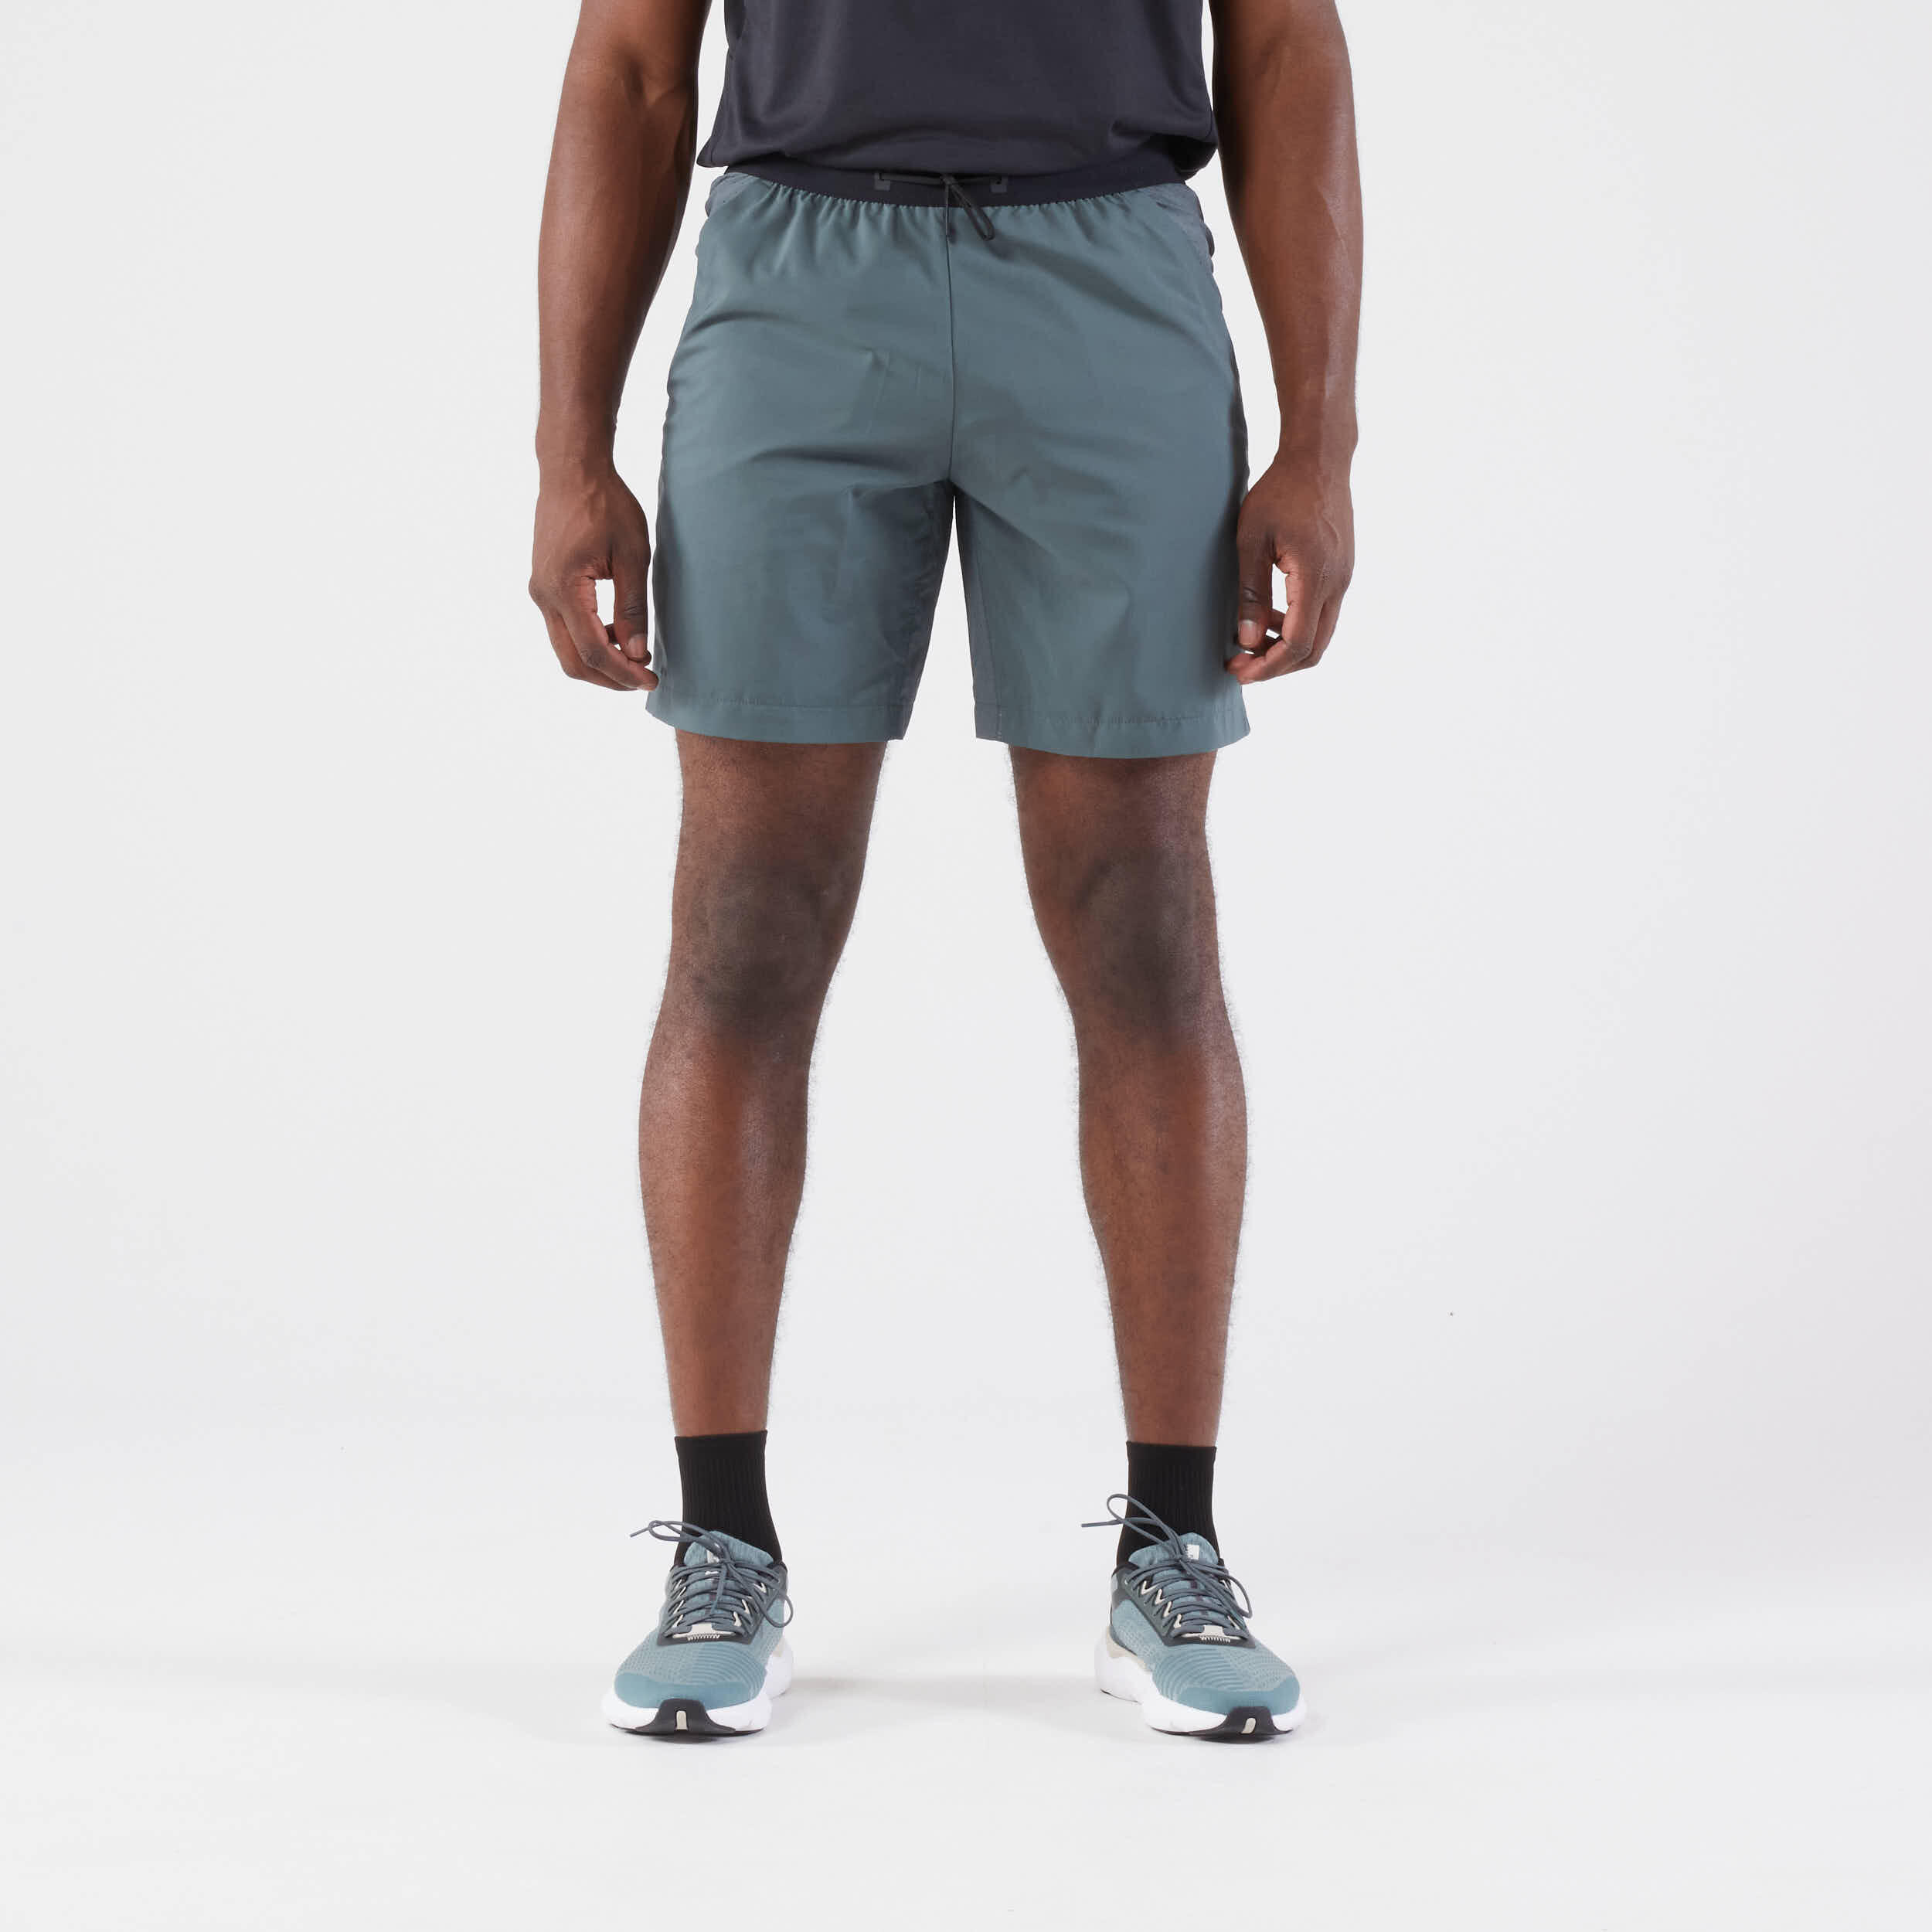 Decathlon | Pantaloncini running uomo RUN 500 DRY verde scuro-grigio |  Kiprun